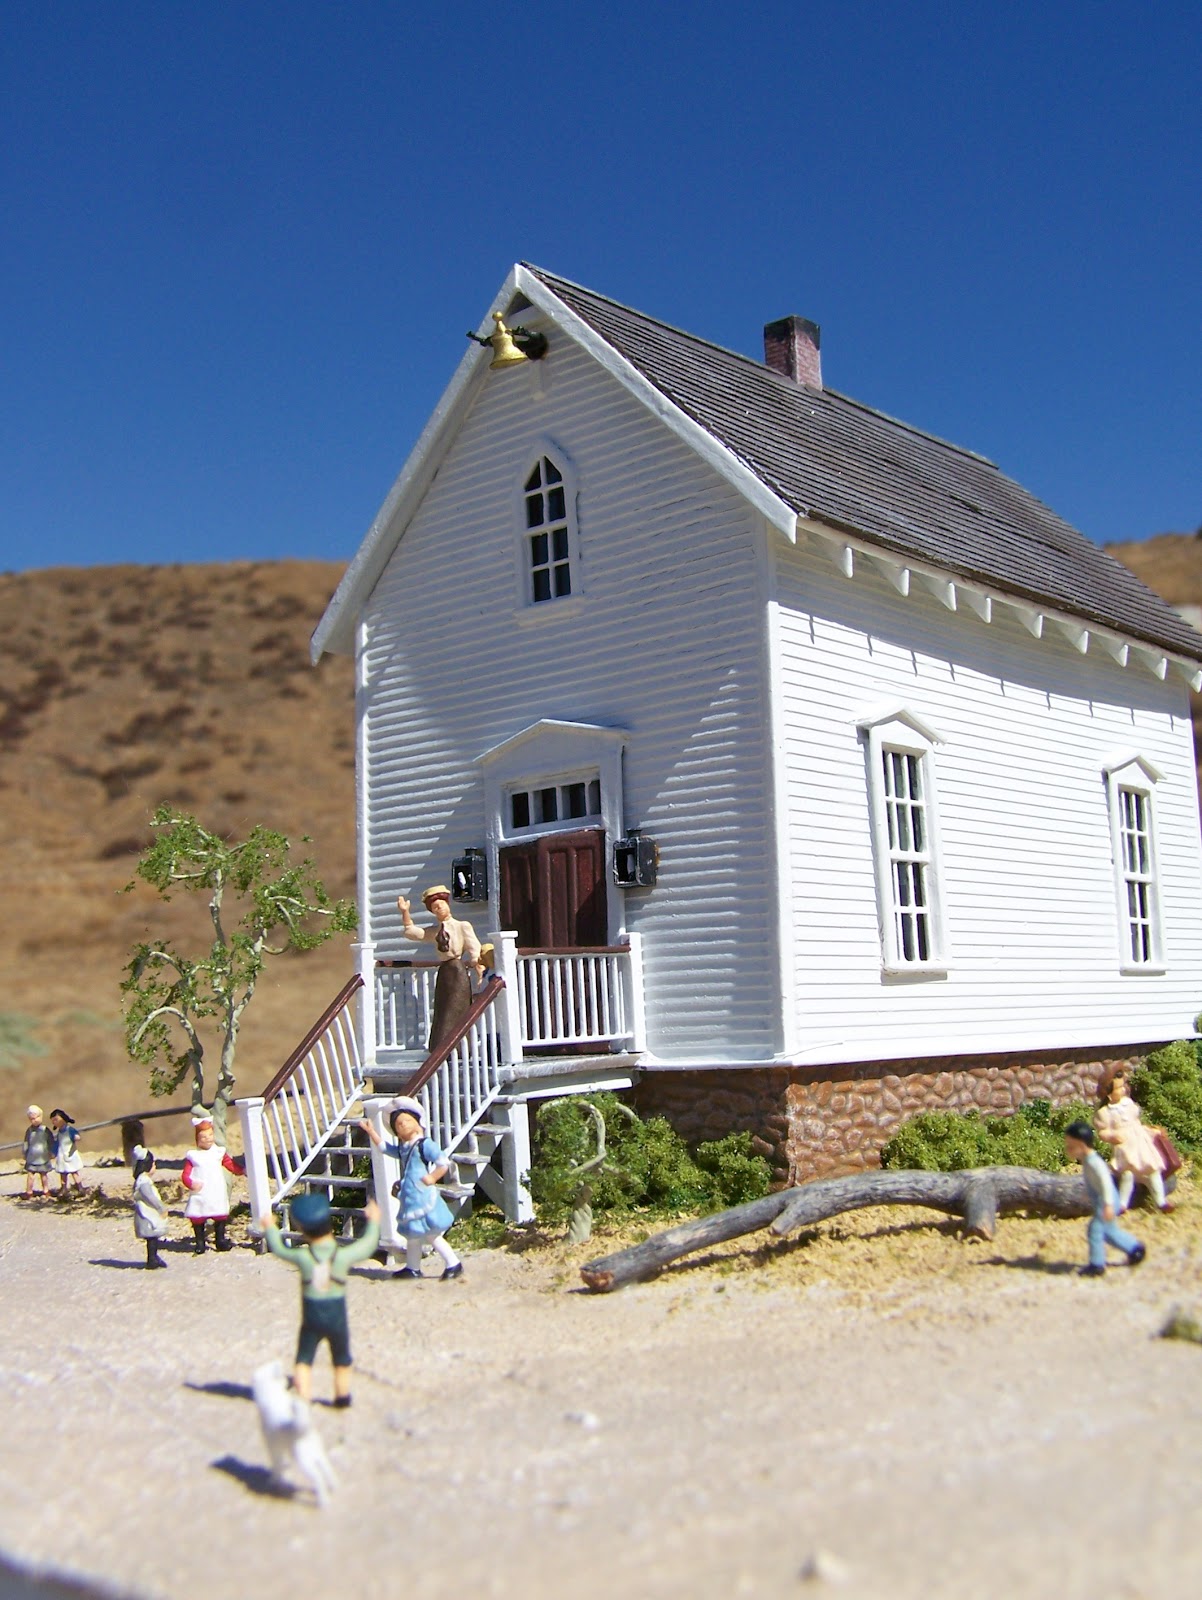 WALNUT GROVE SCHOOL HOUSE MODEL from Little House on the Prairie TV series